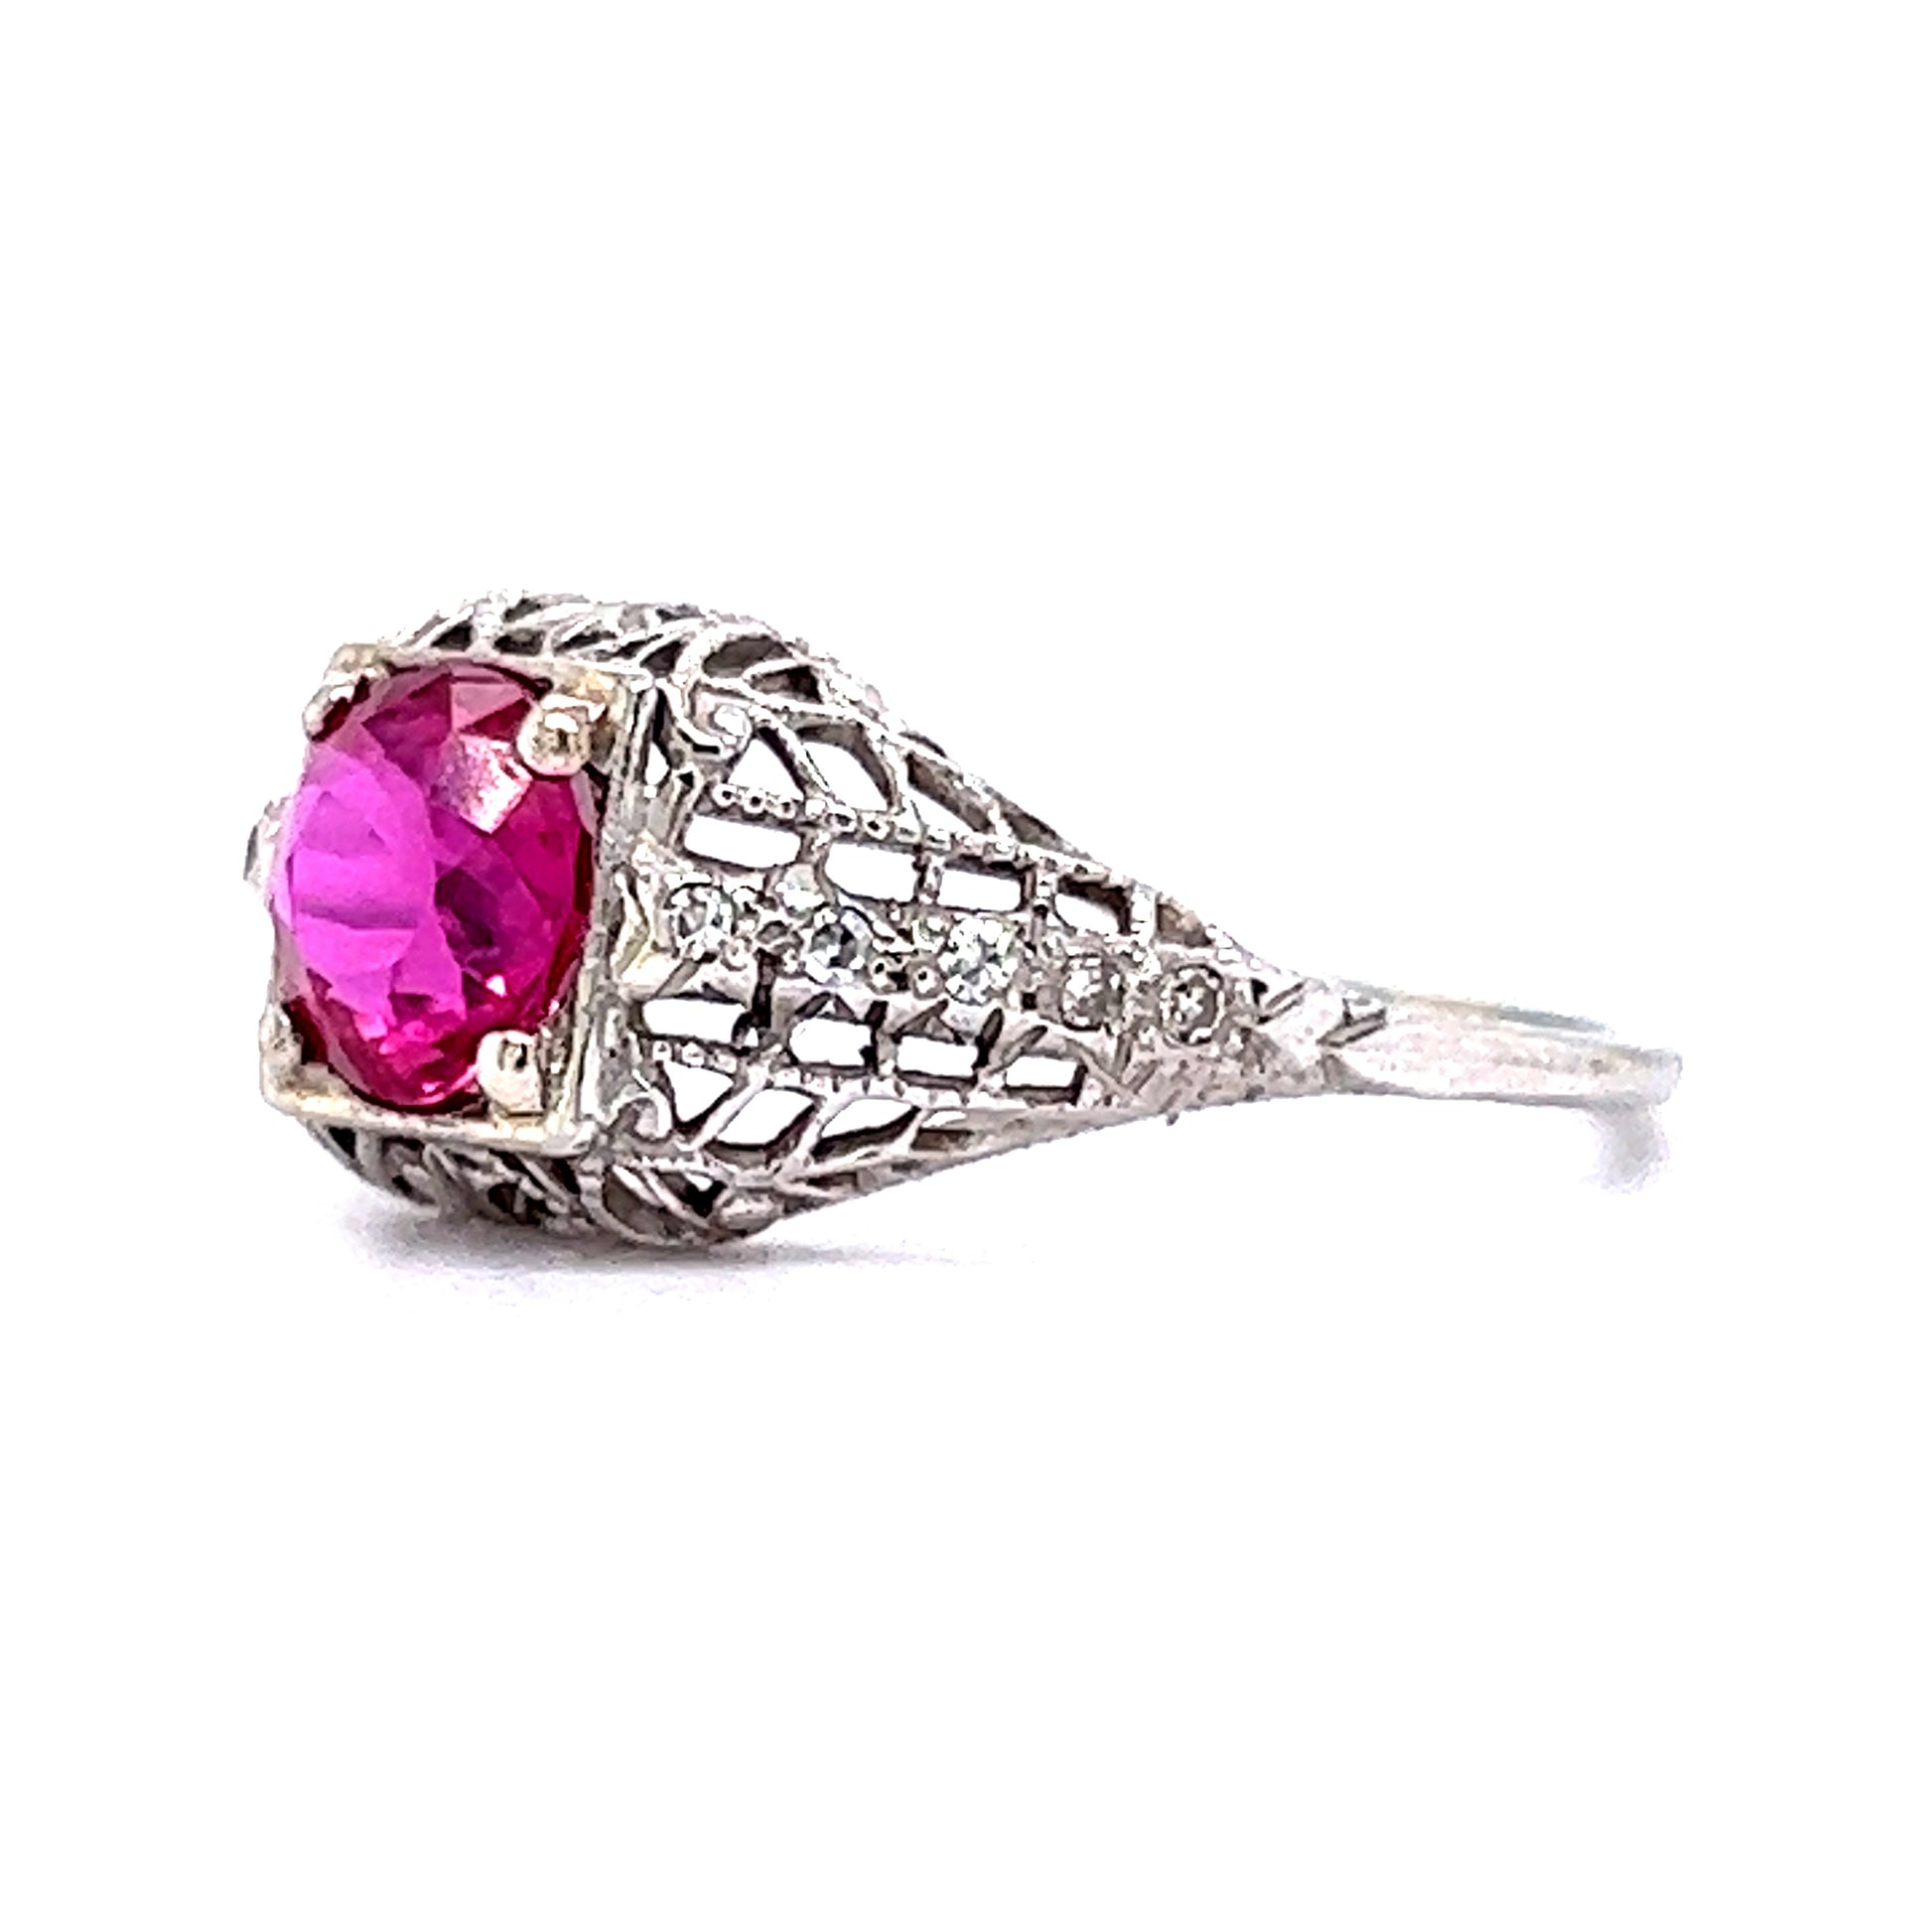 Vintage Sapphire Art Deco Engagement Ring Style - Art Deco 1/2 Carat Princess Cut Pink Sapphire and Diamond Engagement Ring in 18 Karat White Gold